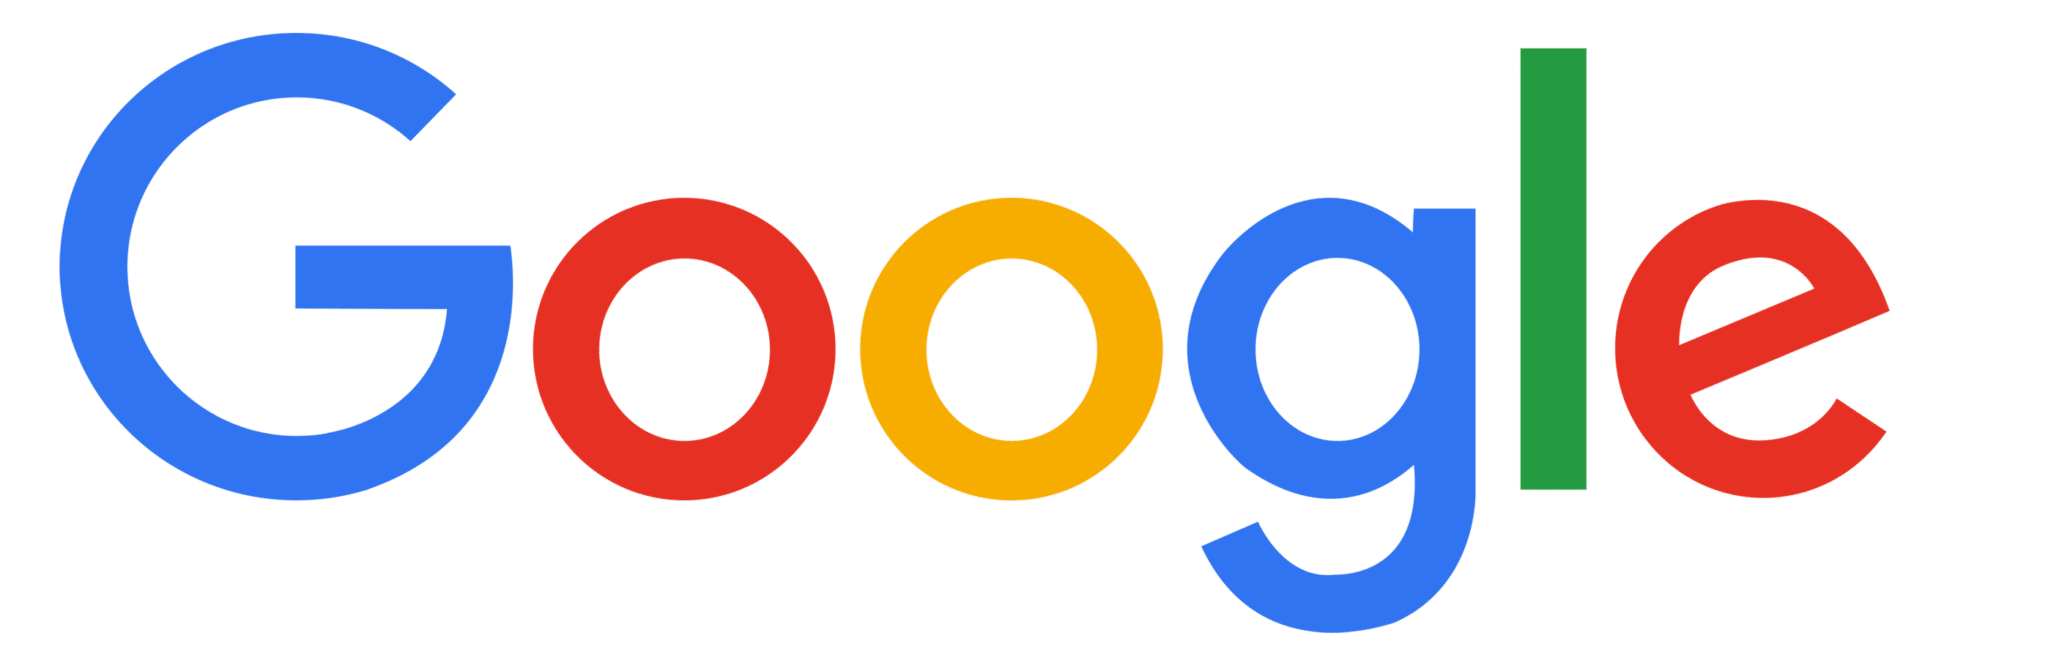 new-google-logo-png